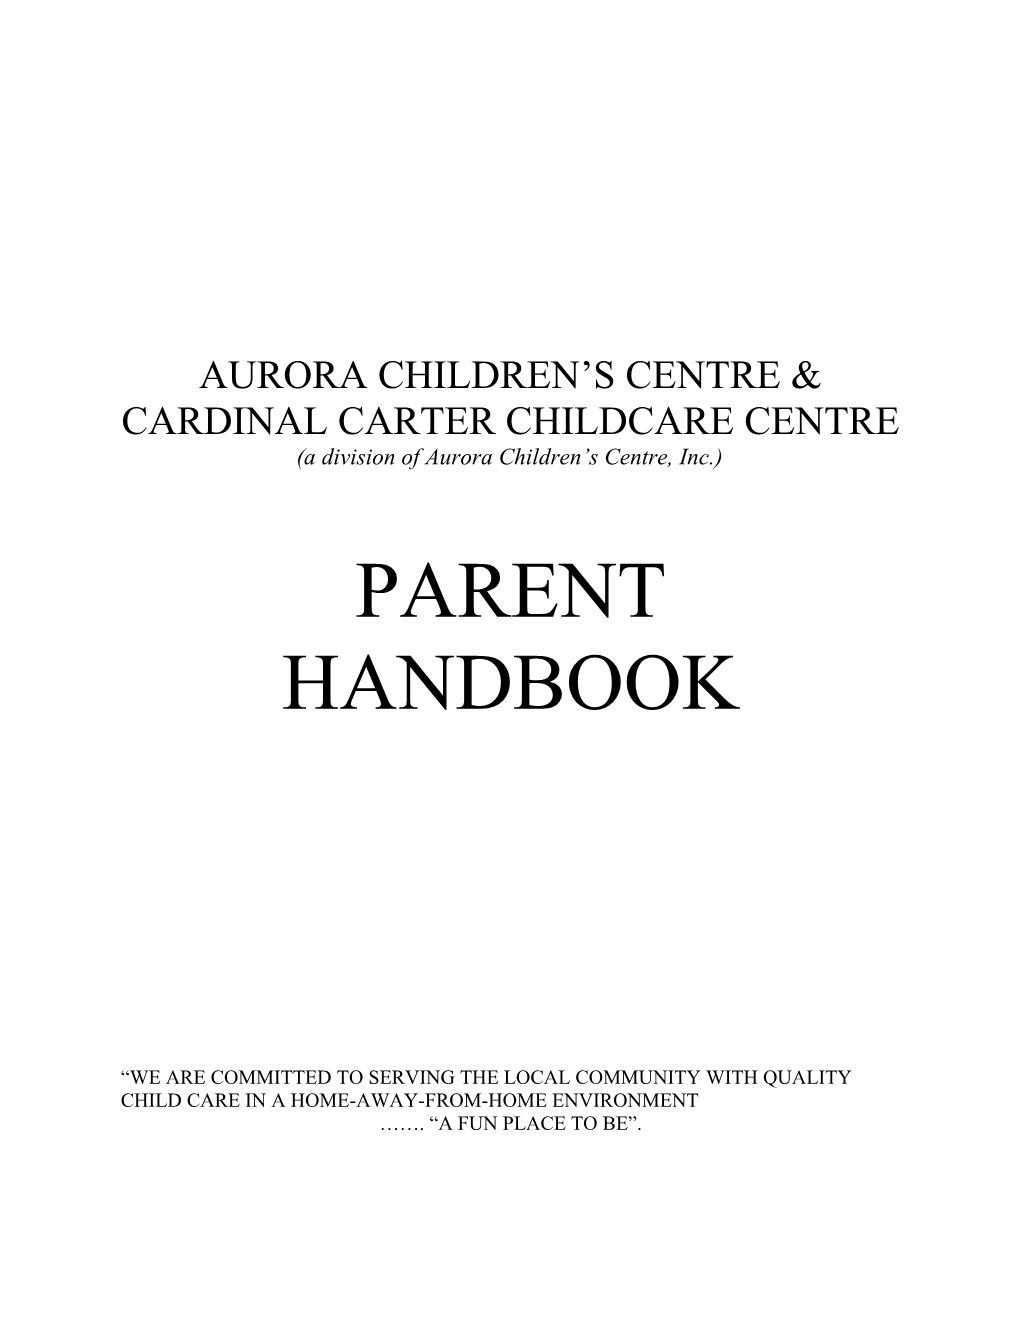 AURORA CHILDREN S CENTRE & CARDINAL CARTER CHILDCARE CENTRE (A Division of Aurora Children